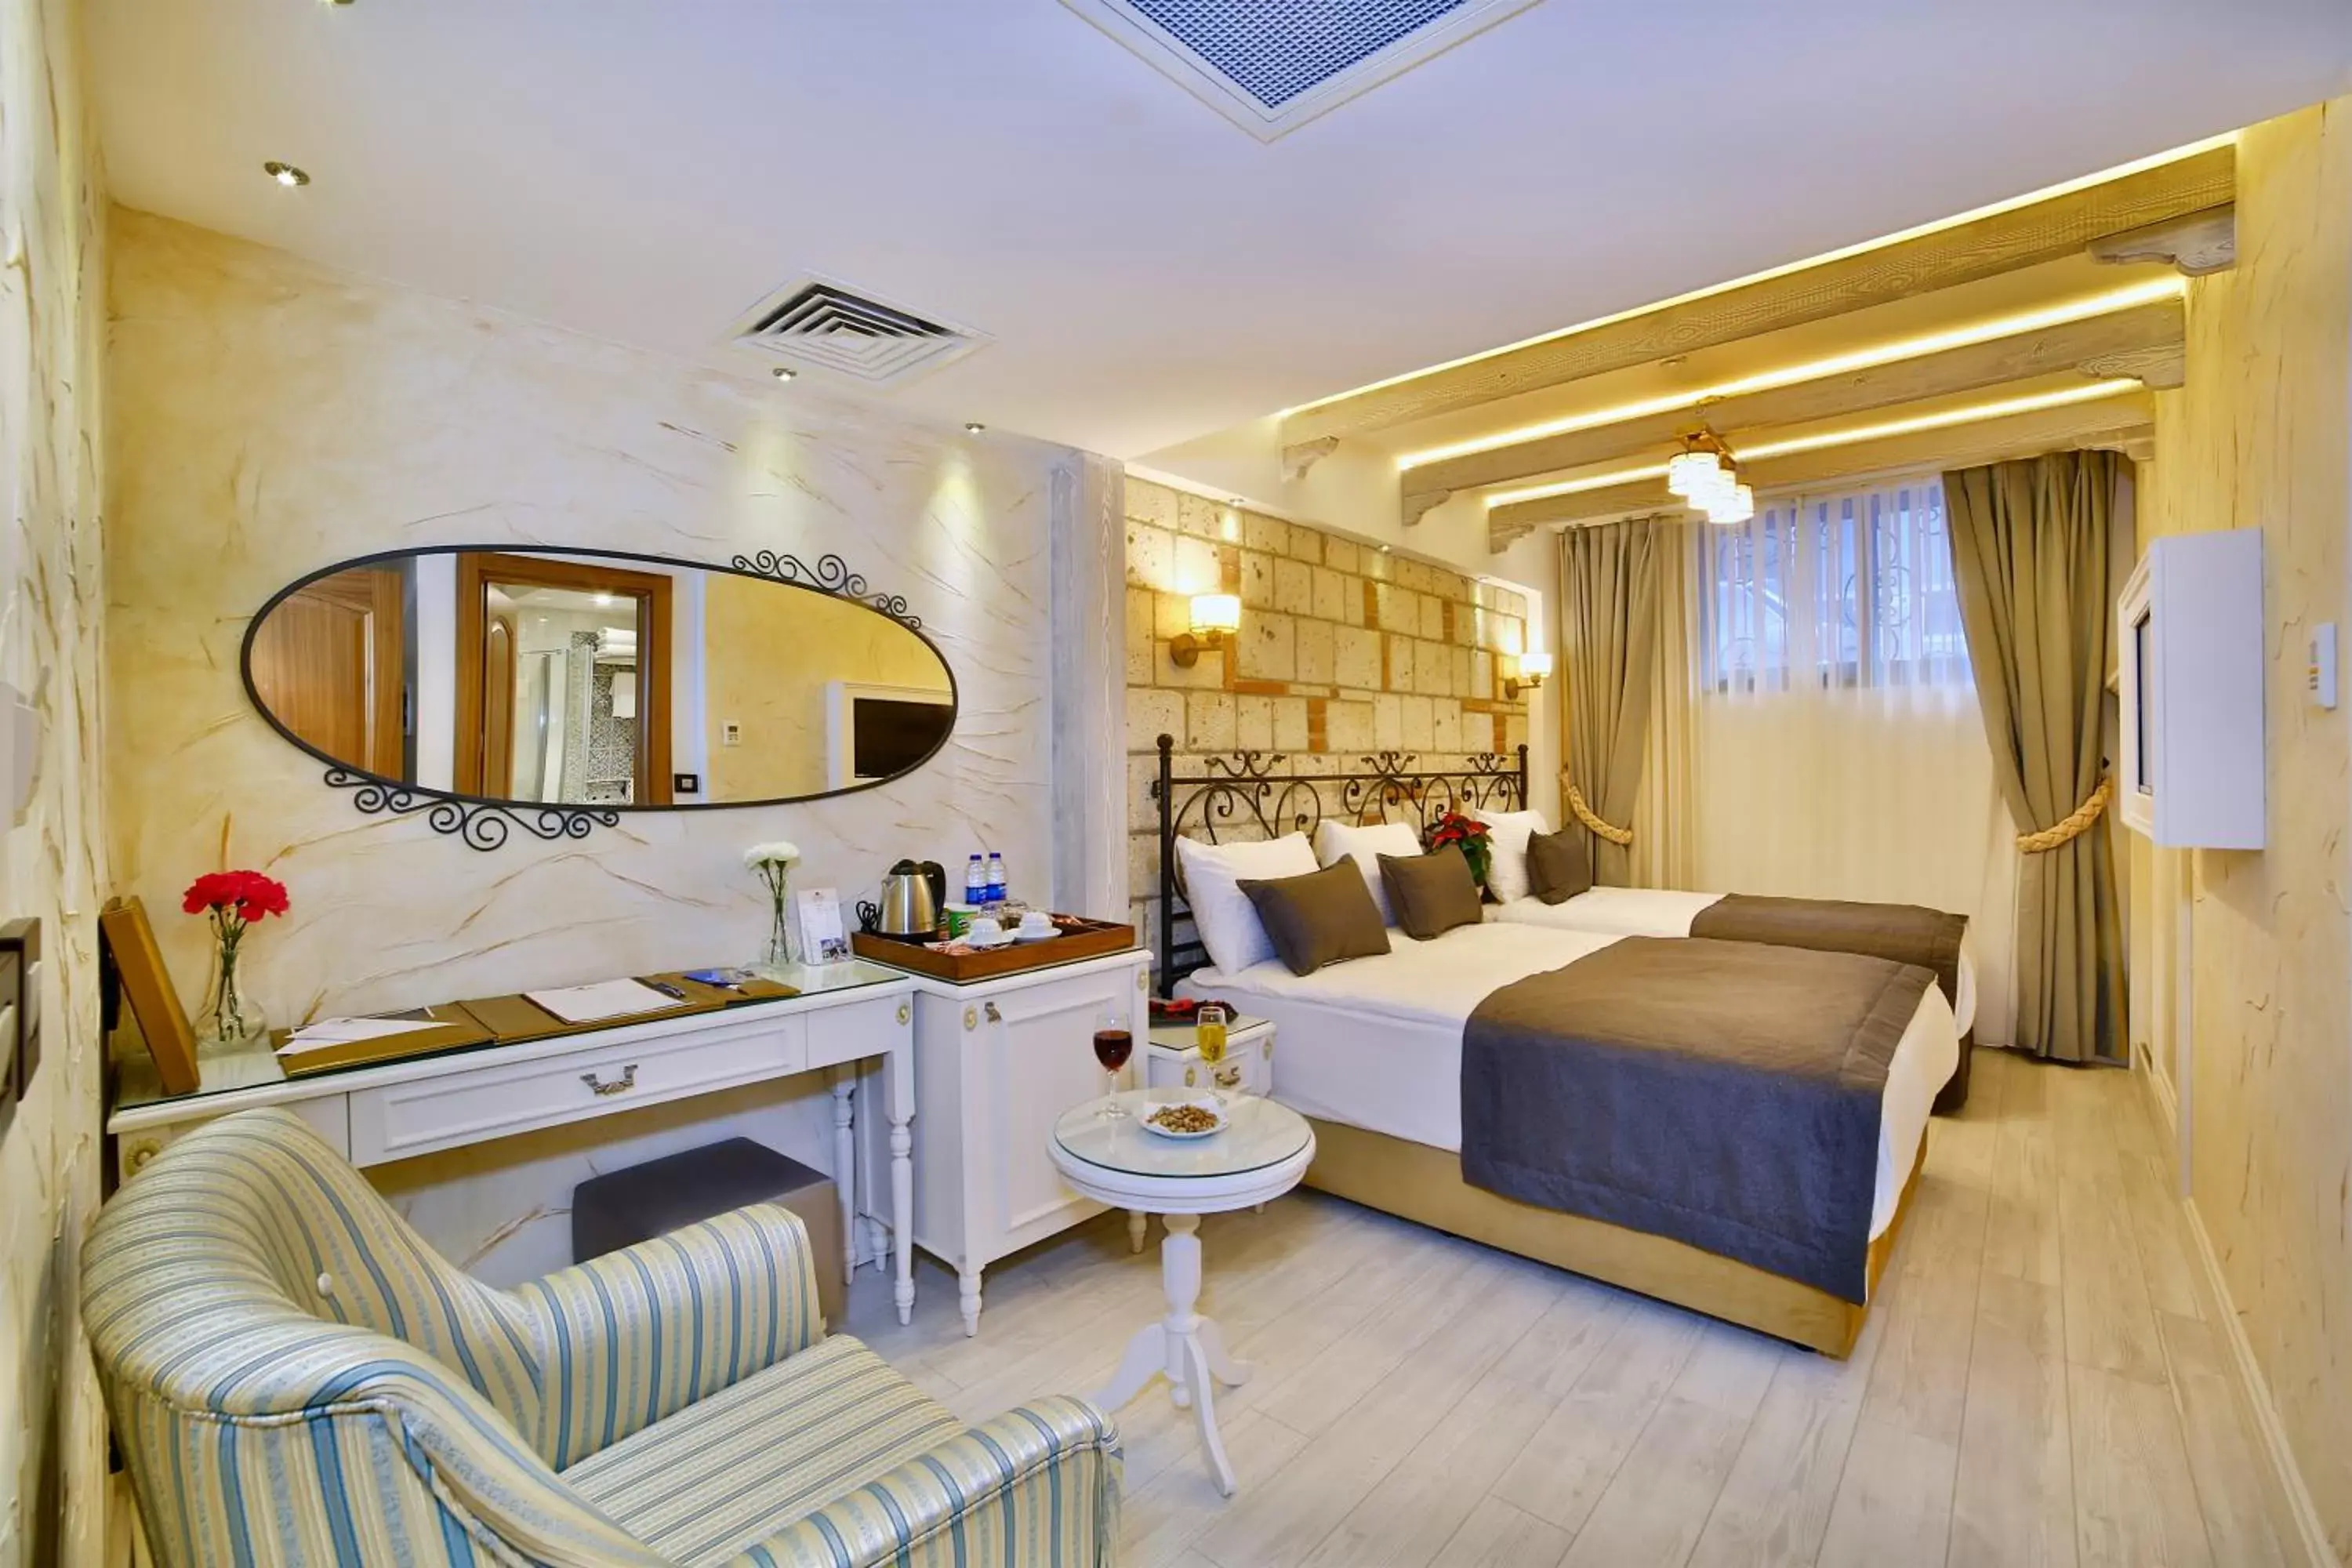 Seating Area in Yılsam Sultanahmet Hotel